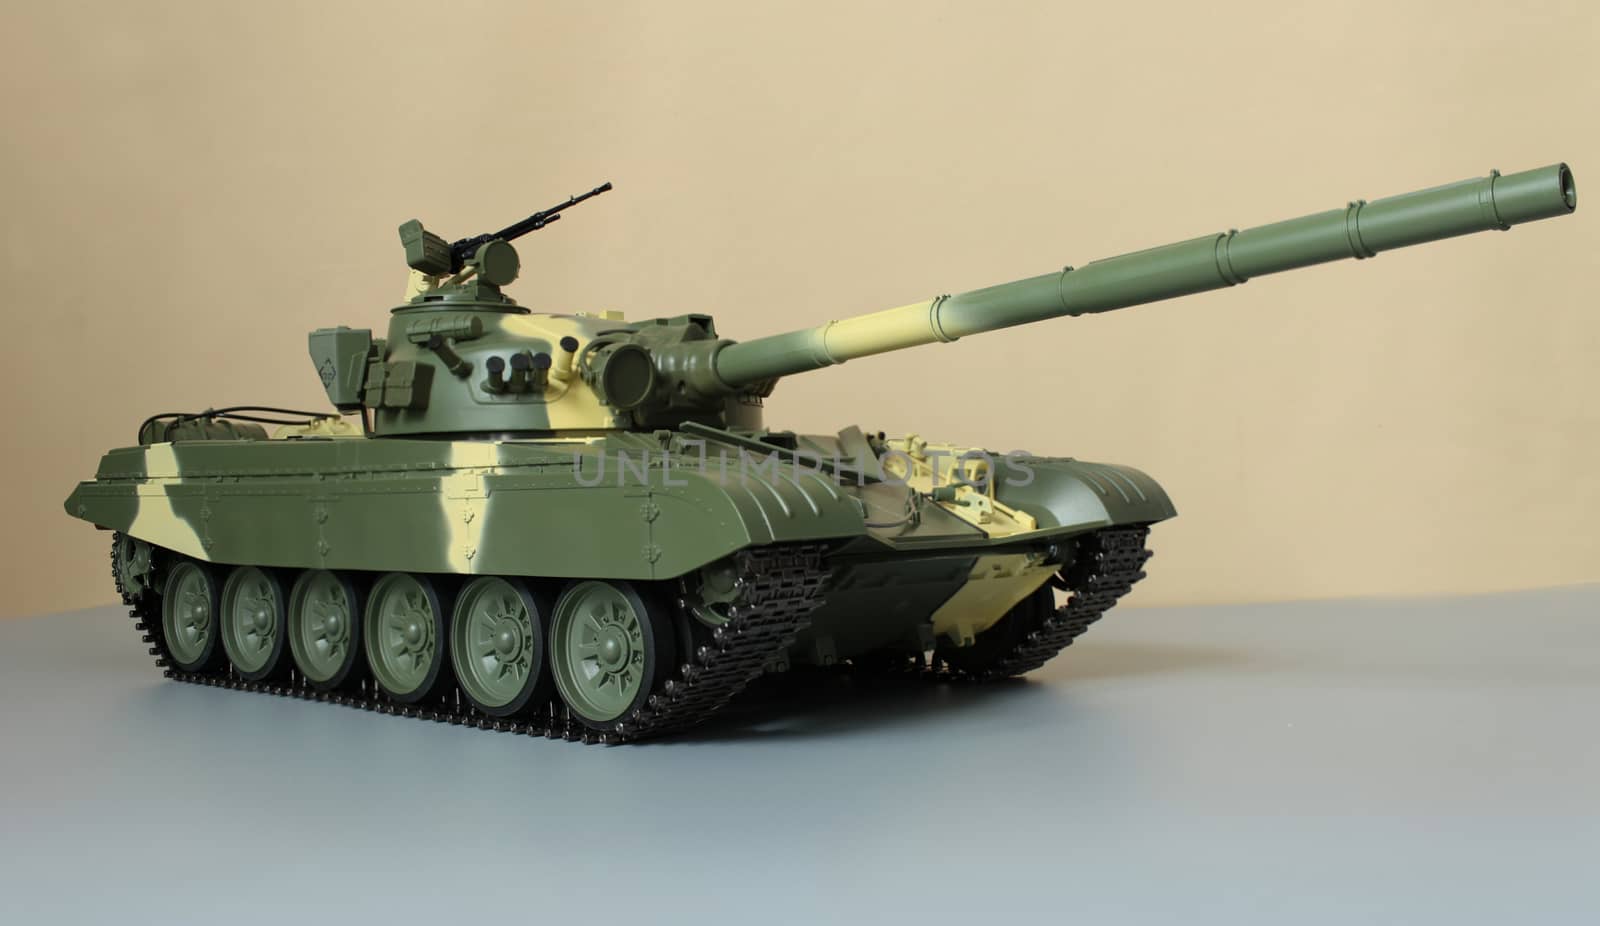 Huge firepower Soviet tank T-72, camouflage coloring model